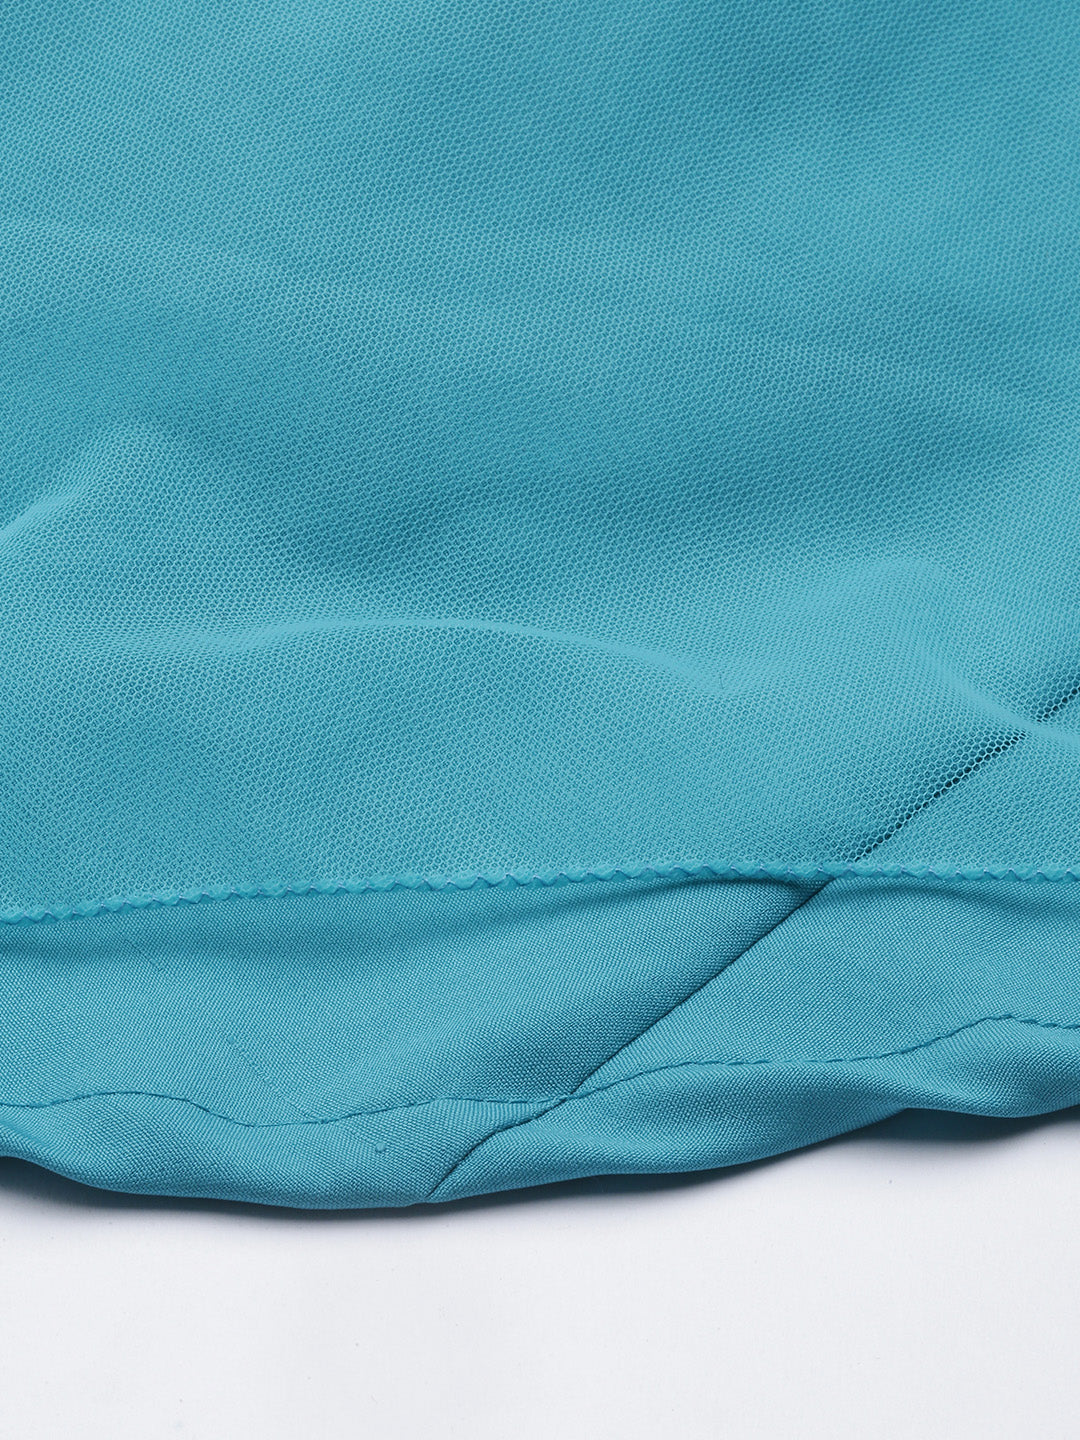 Multicolored-Embroidered-&-Scuba-Blue-Gown